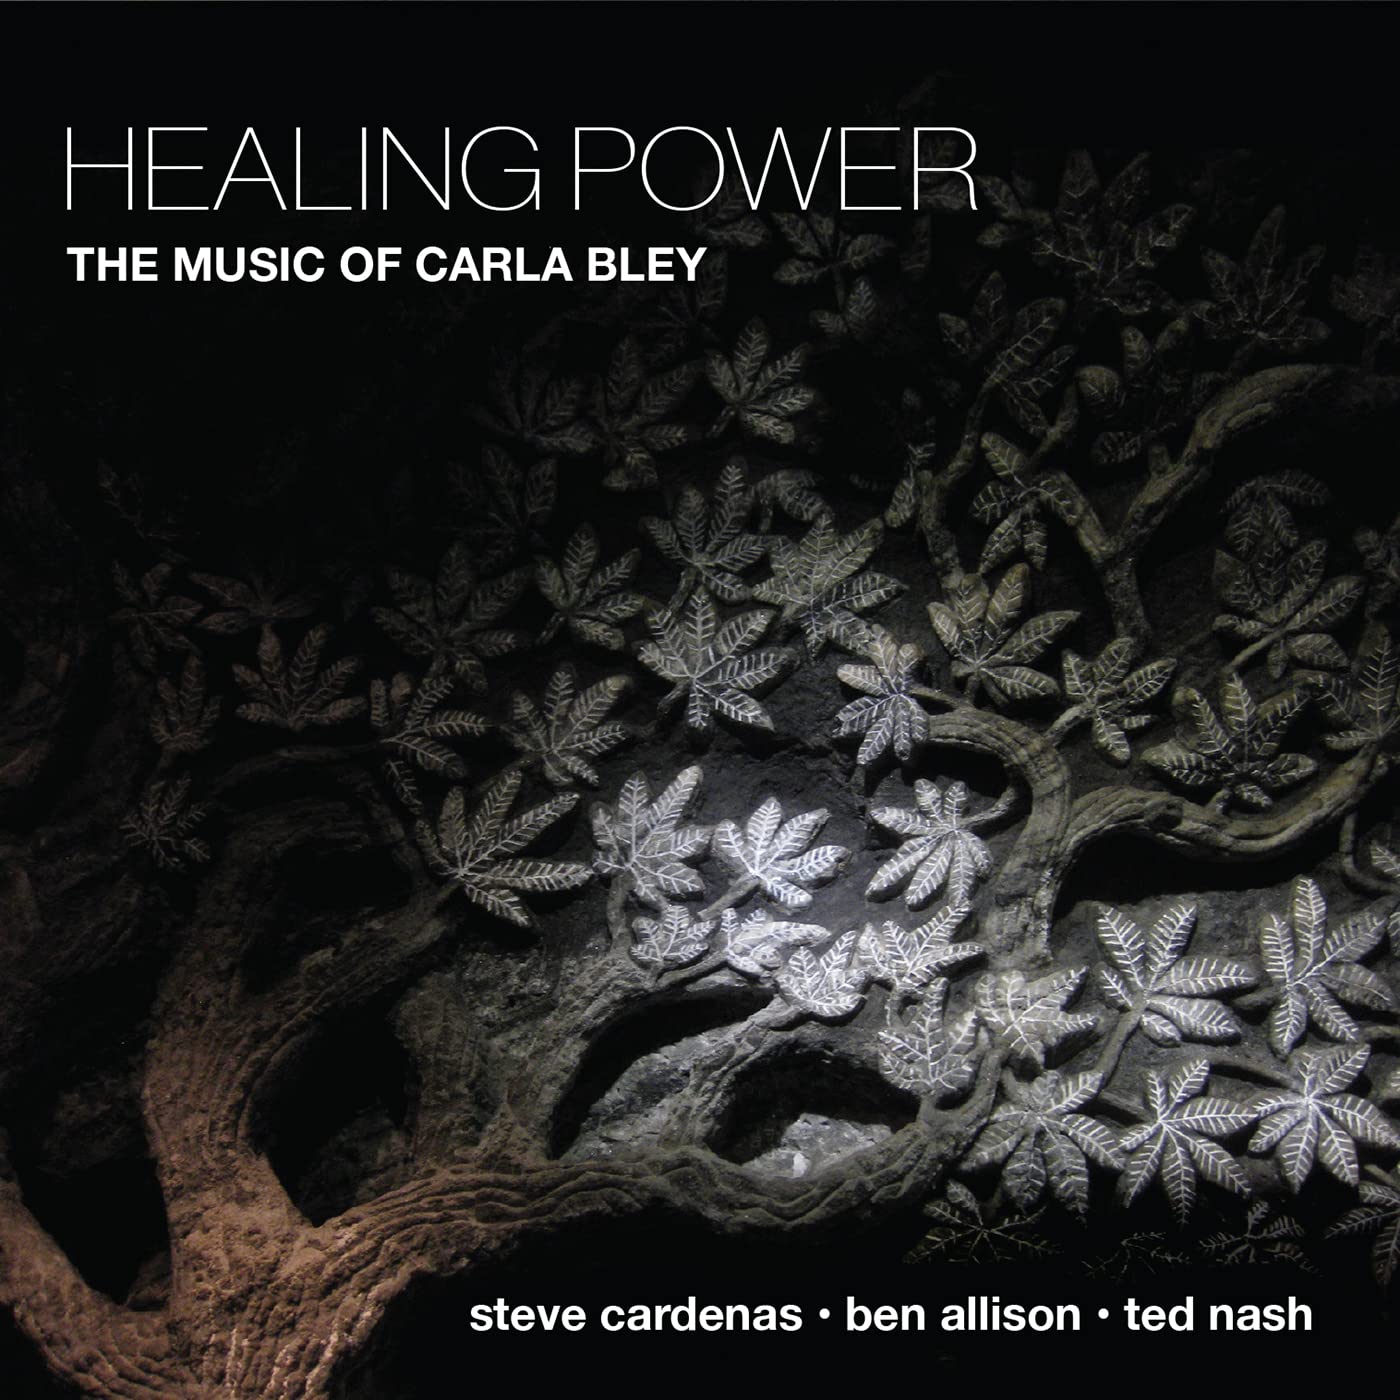 STEVE CARDENAS - Steve Cardenas  - Ted Nash - Ben Allison : Healing Power - The Music of Carla Bley cover 